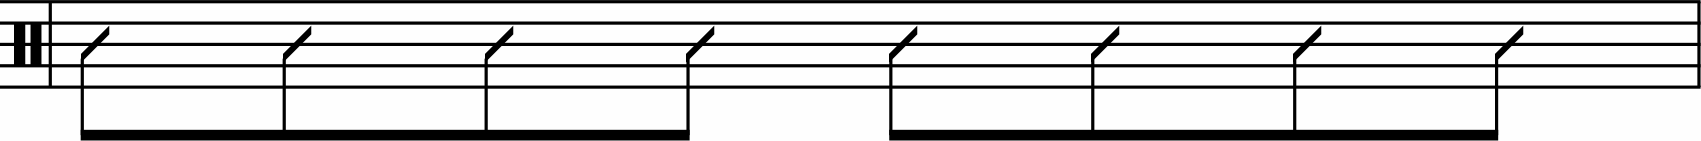 Eighth-note rhythm example.